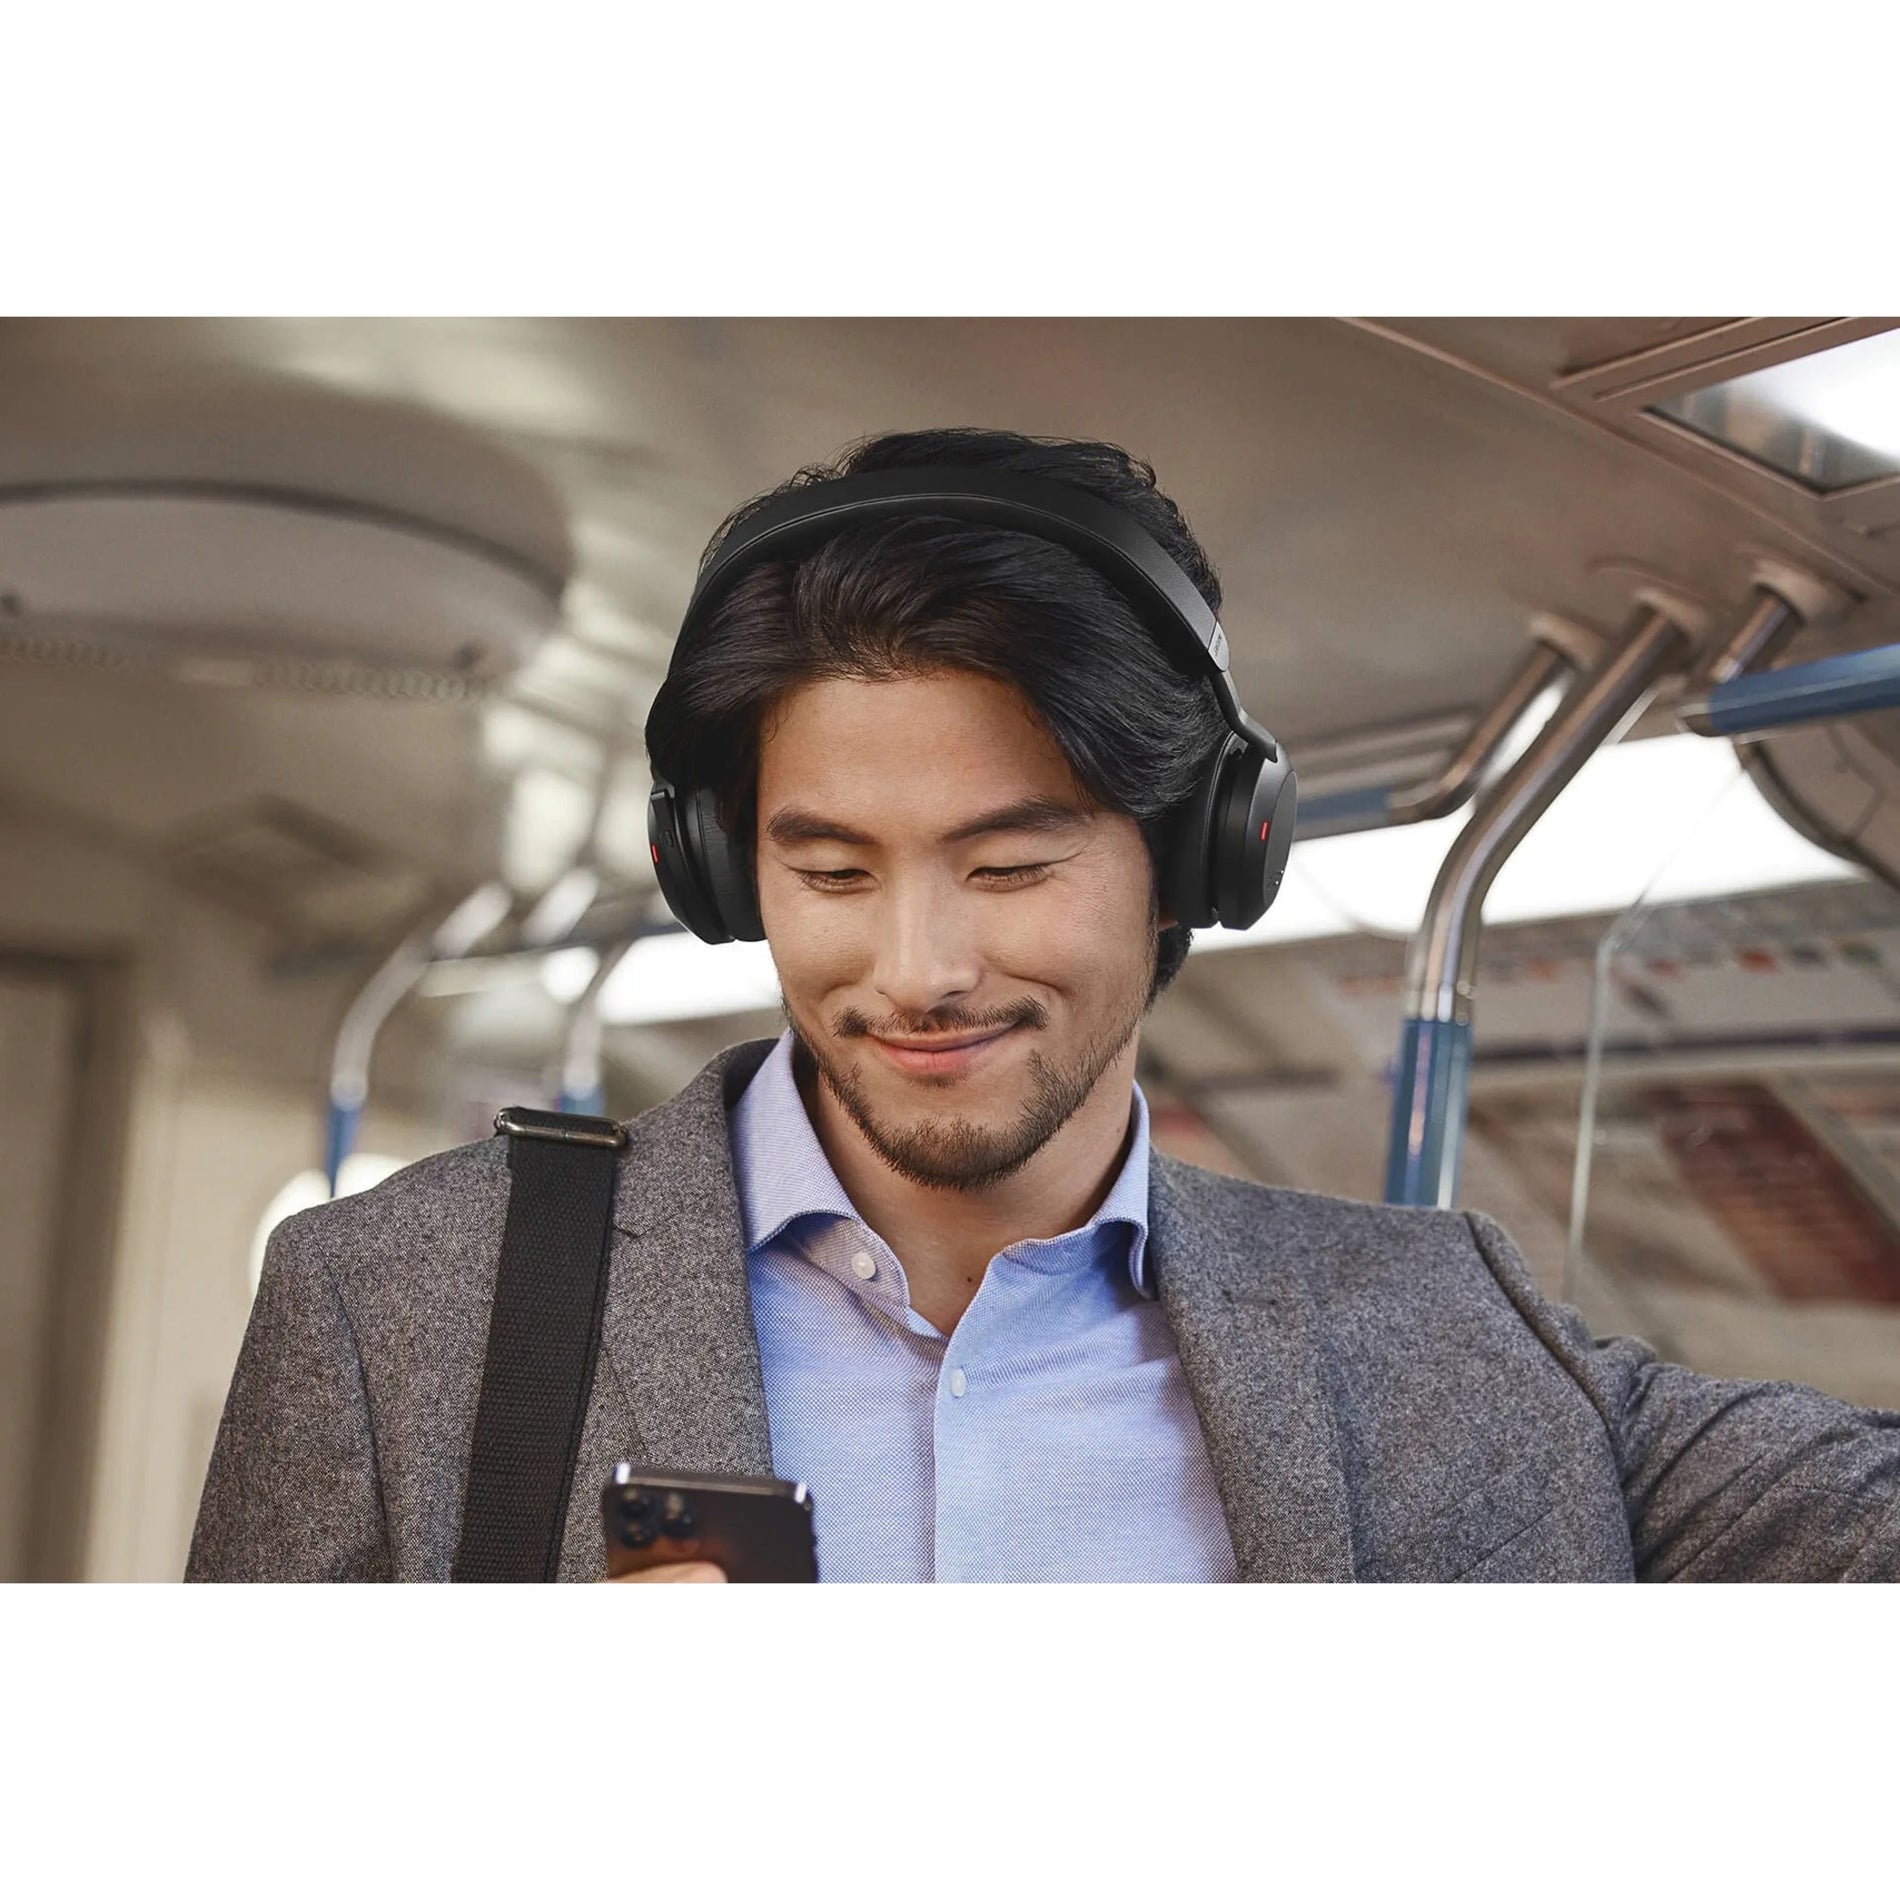 Jabra 27599-999-989 Evolve2 75 Headset, Wireless On-ear Stereo Headset